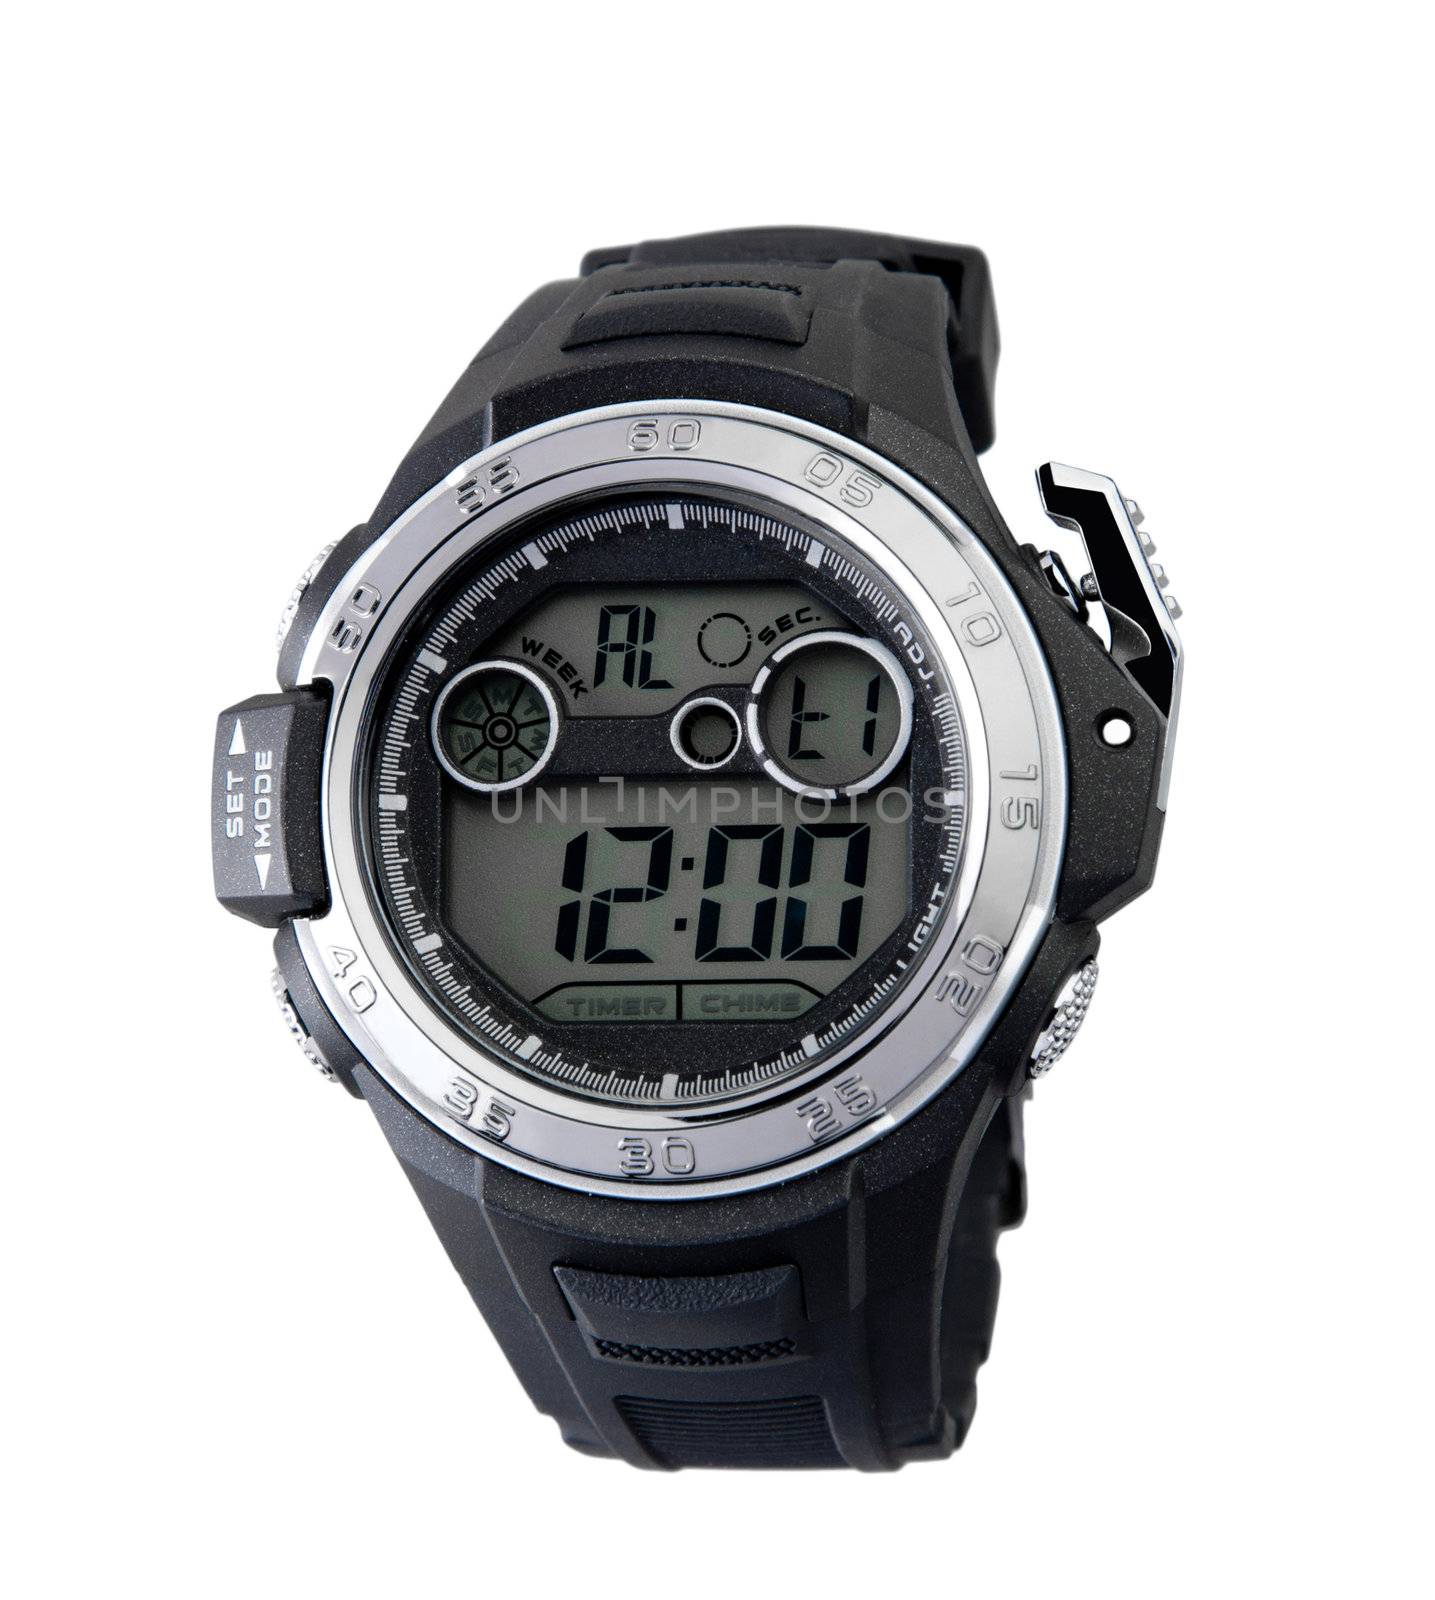 Smart sport style wristwatch your best timepiece accessory by john_kasawa